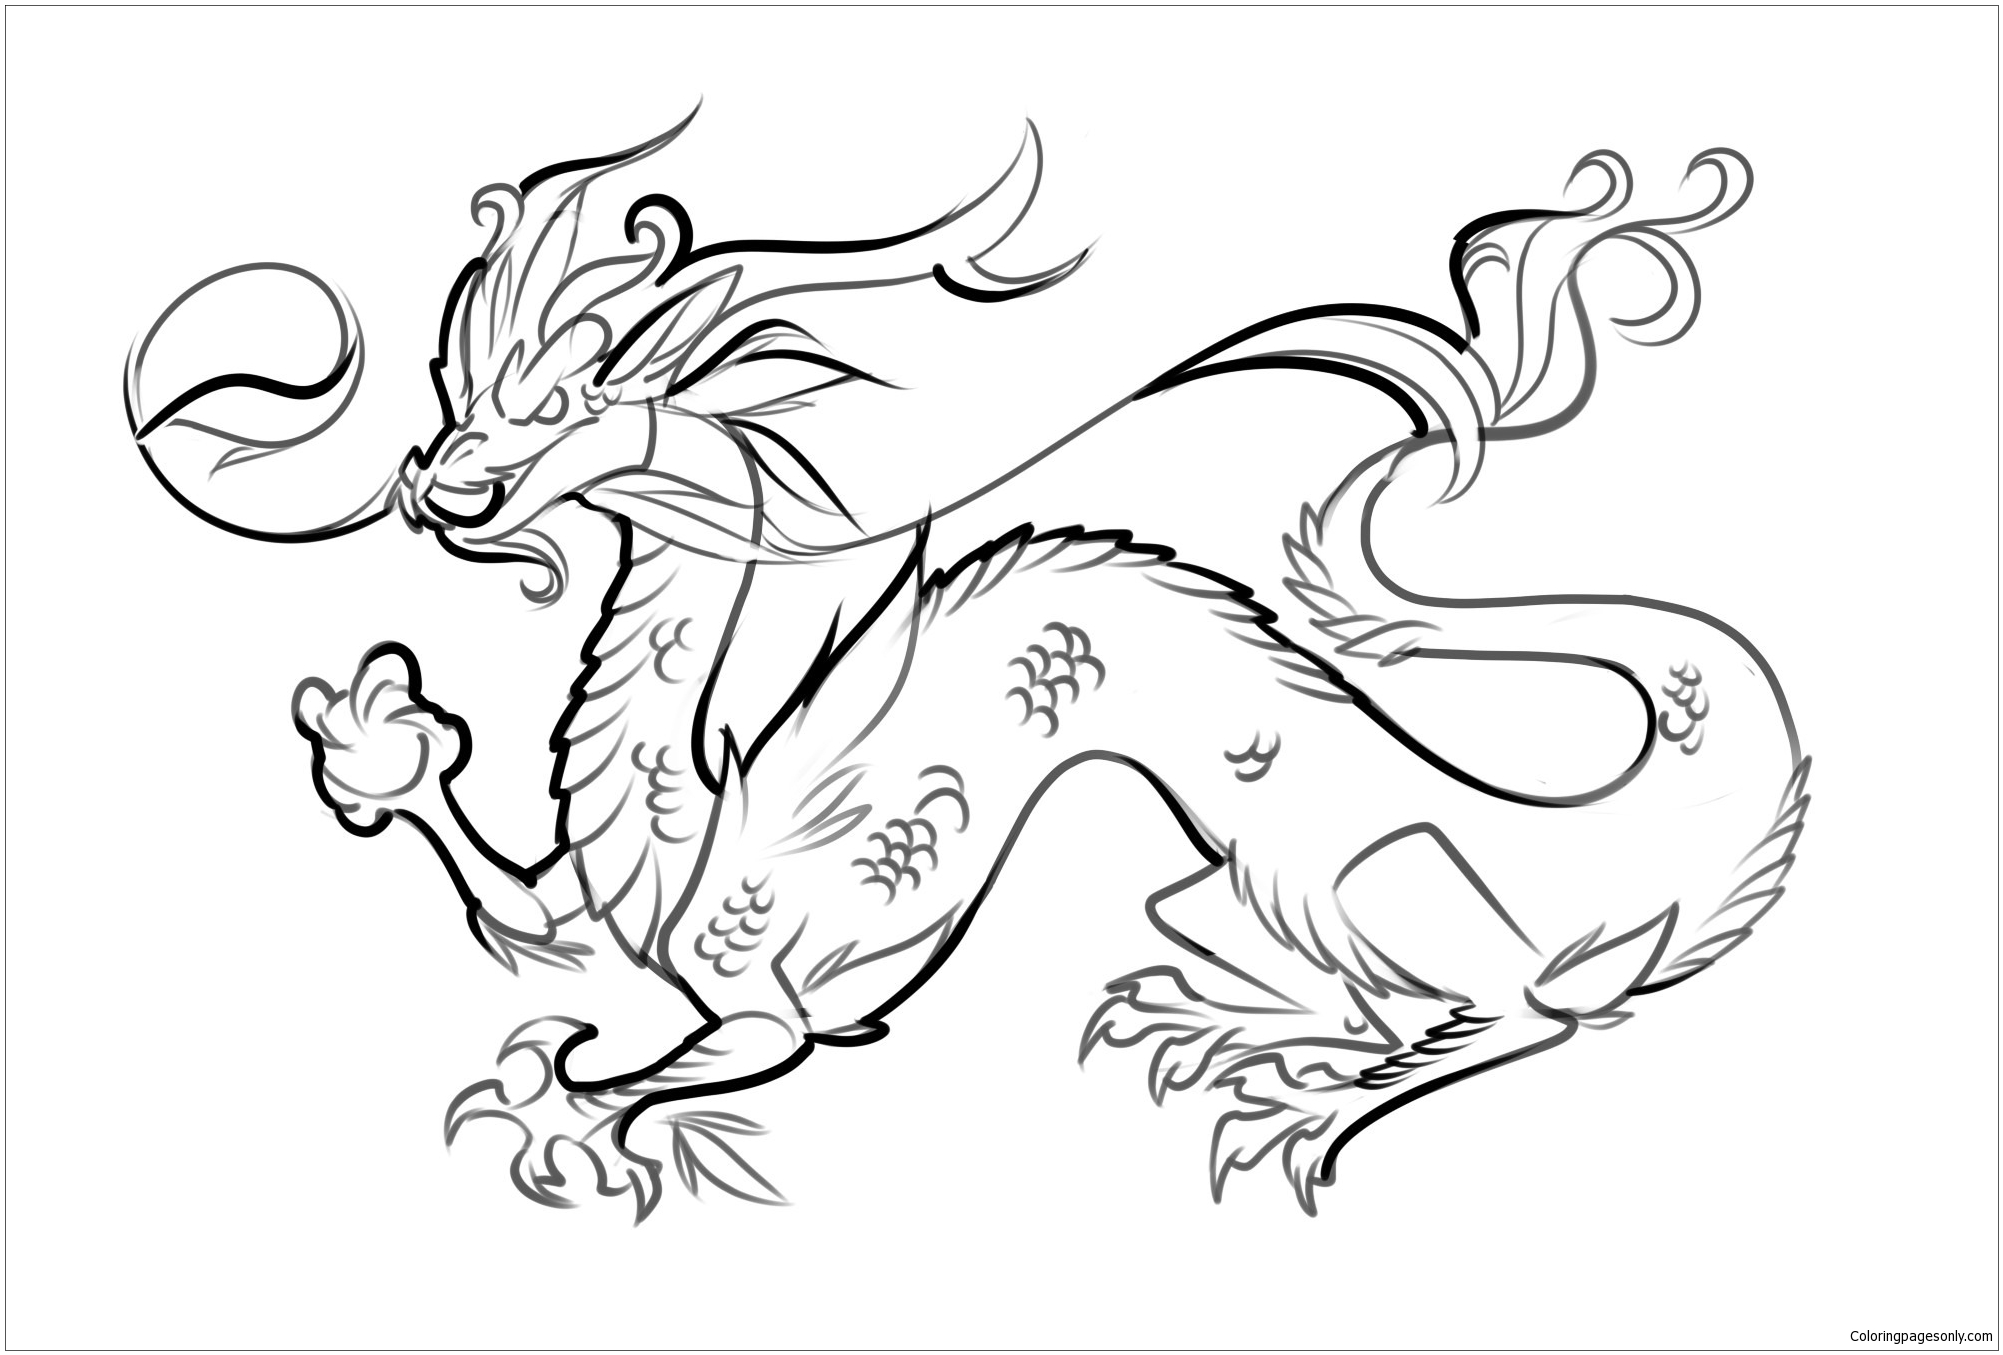 Dragão de página colorida de Dragon